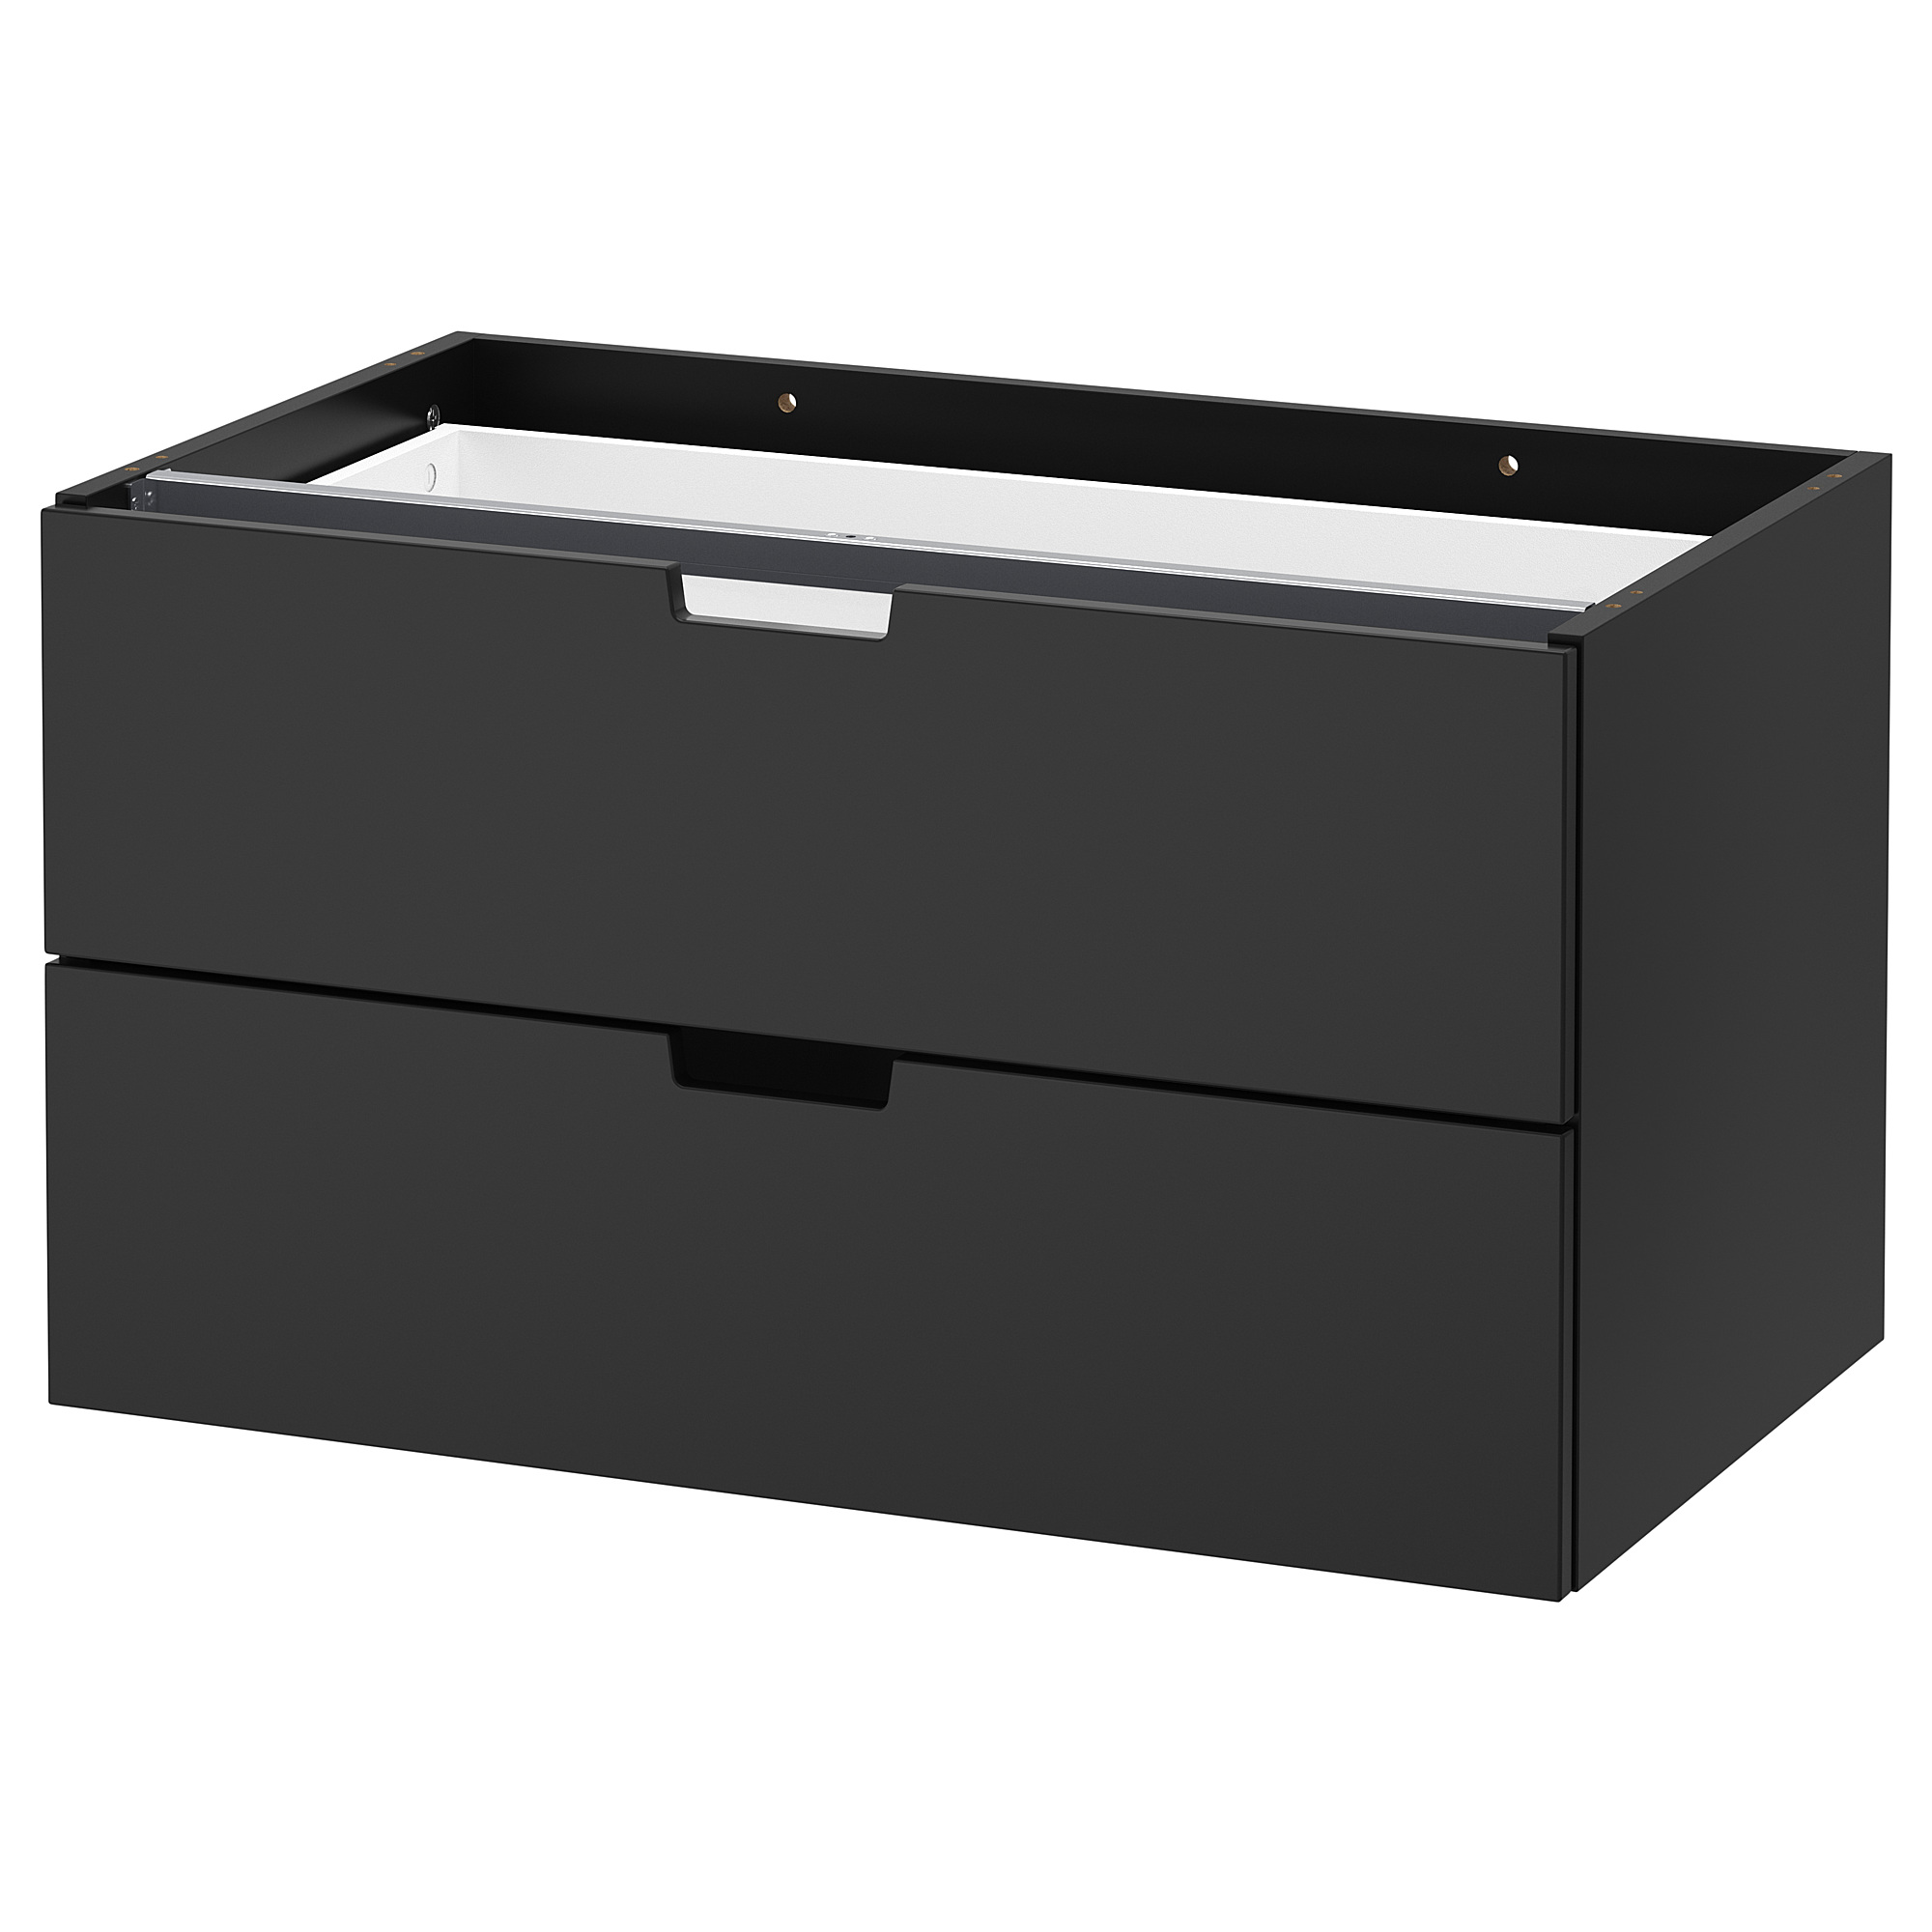 NORDLI modular chest of 2 drawers